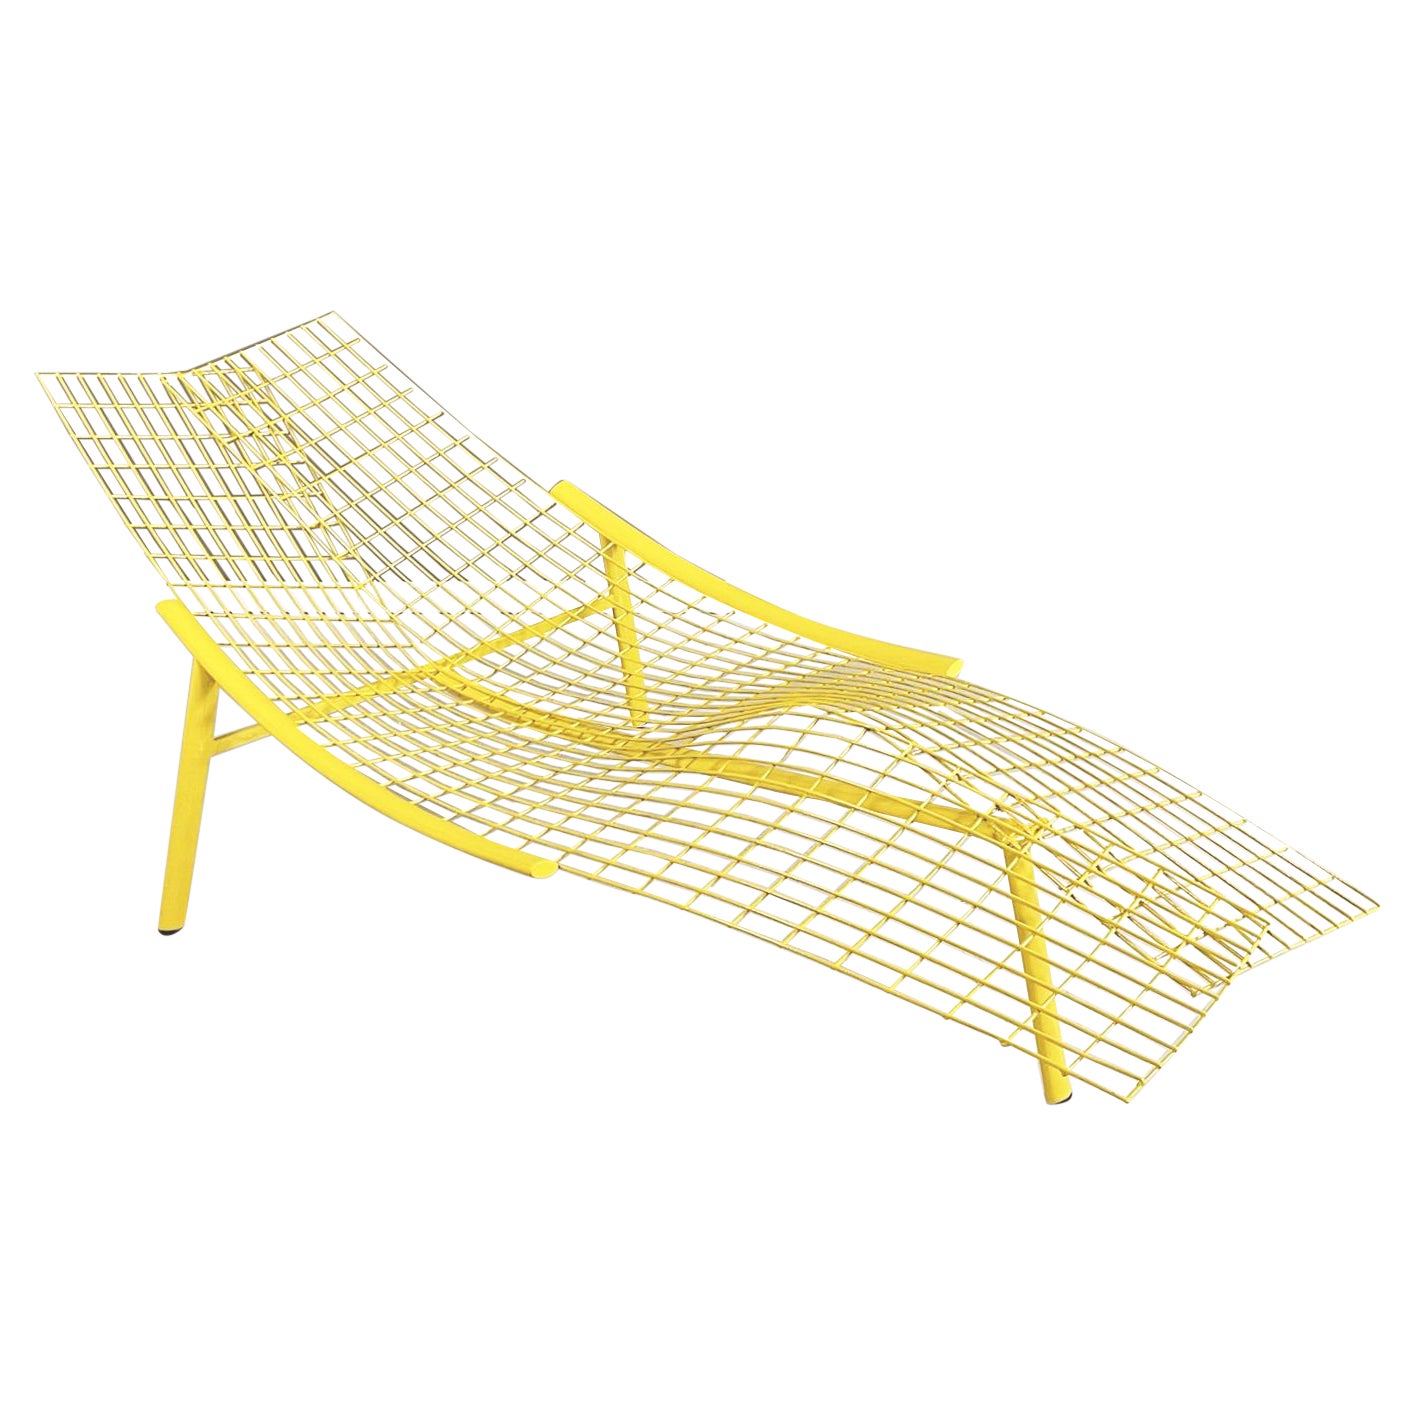 Italian modern Yellow metal Deck chair Swing Rete by Offredi for Saporiti, 1980s